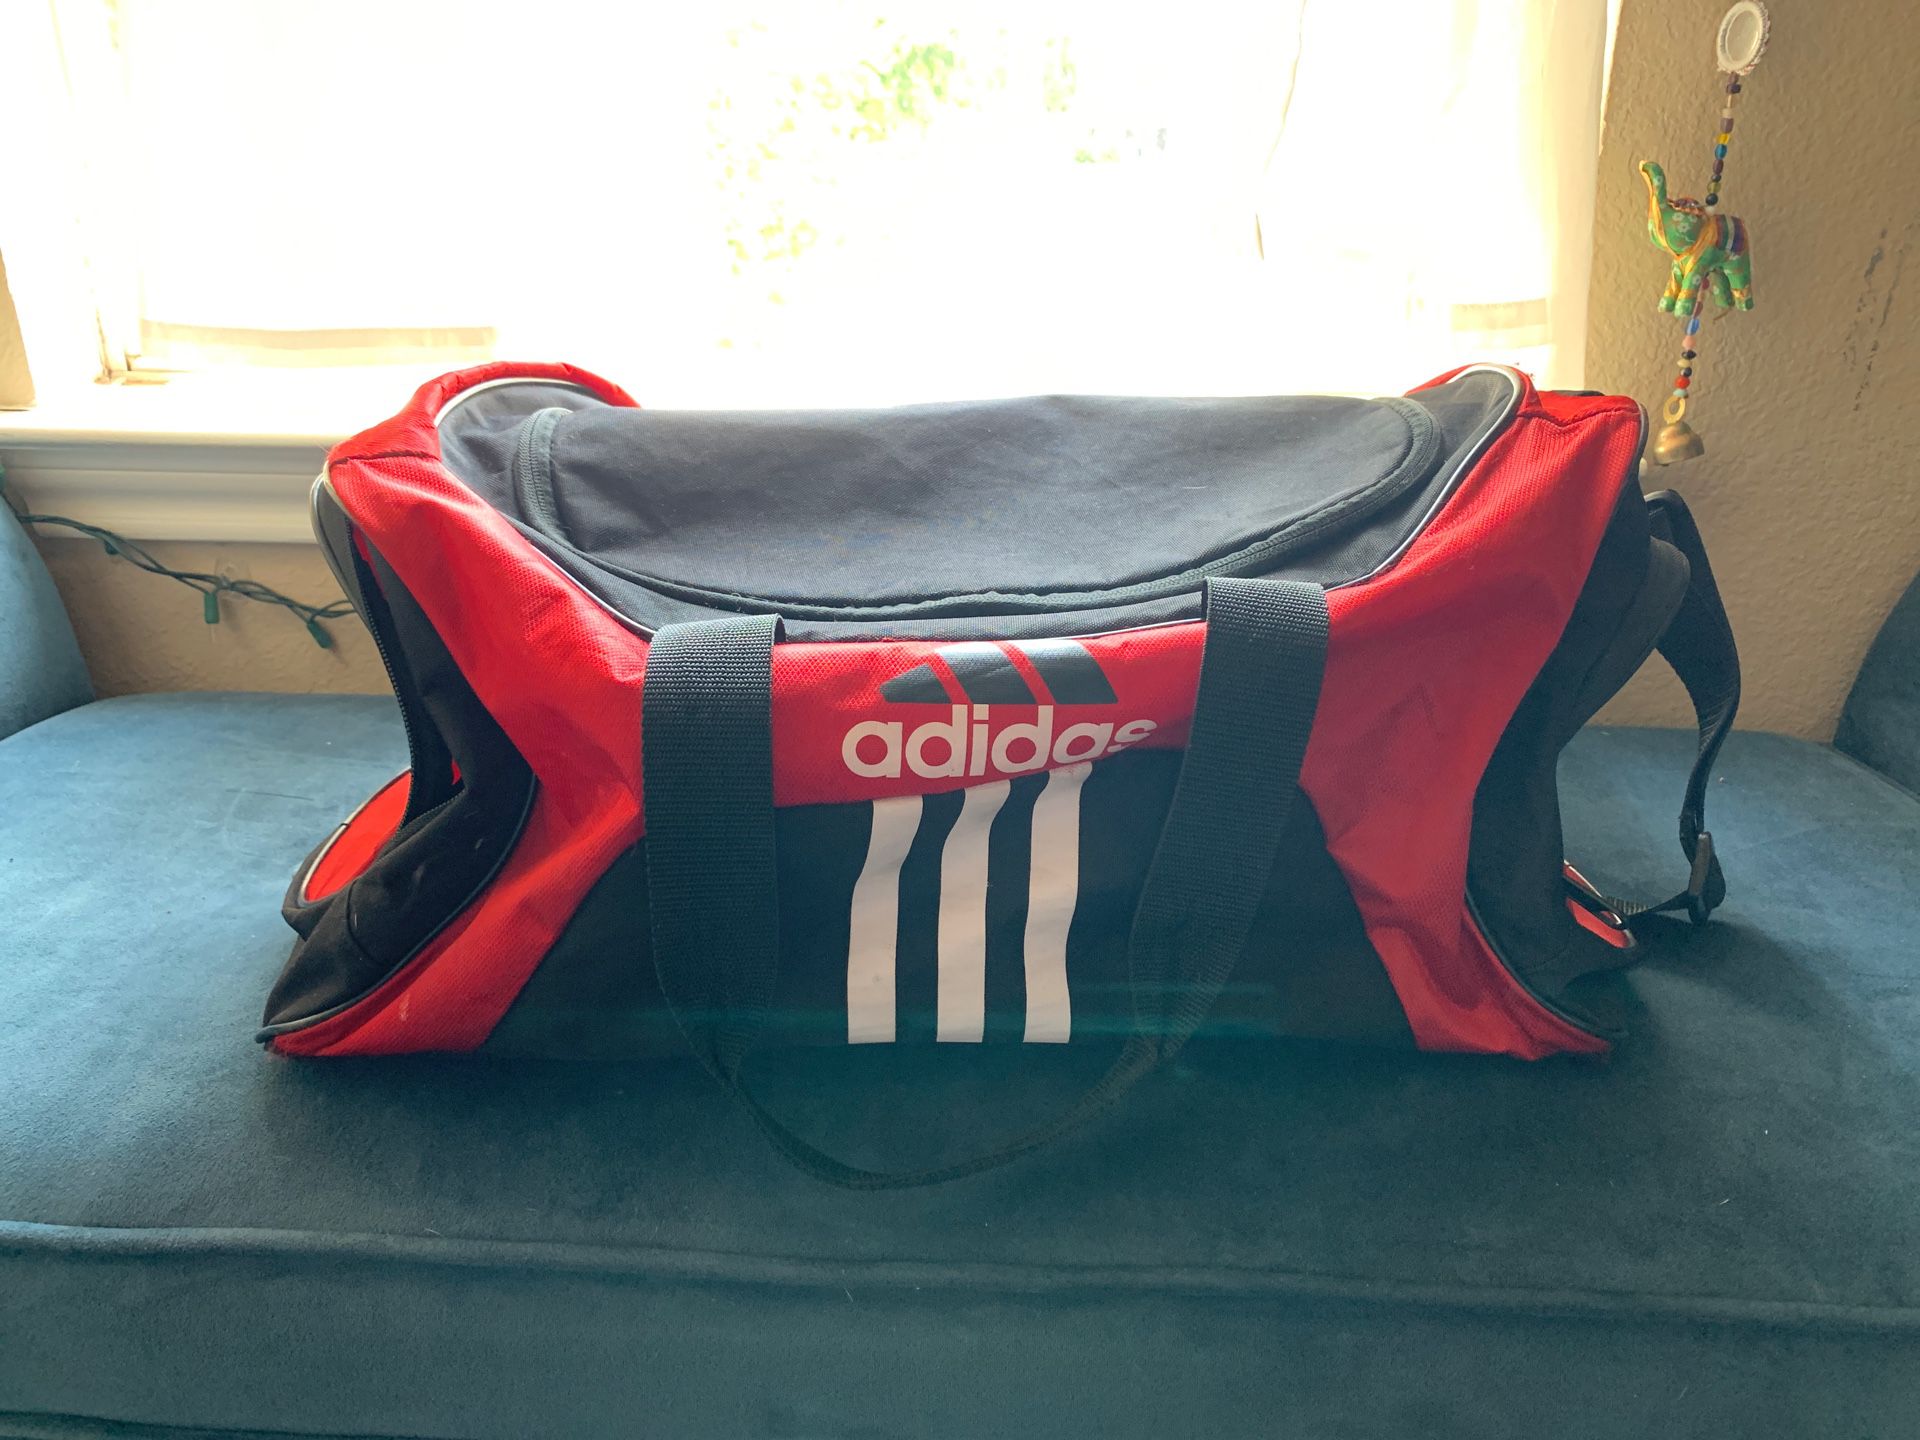 Adidas Athletic Duffle Bag